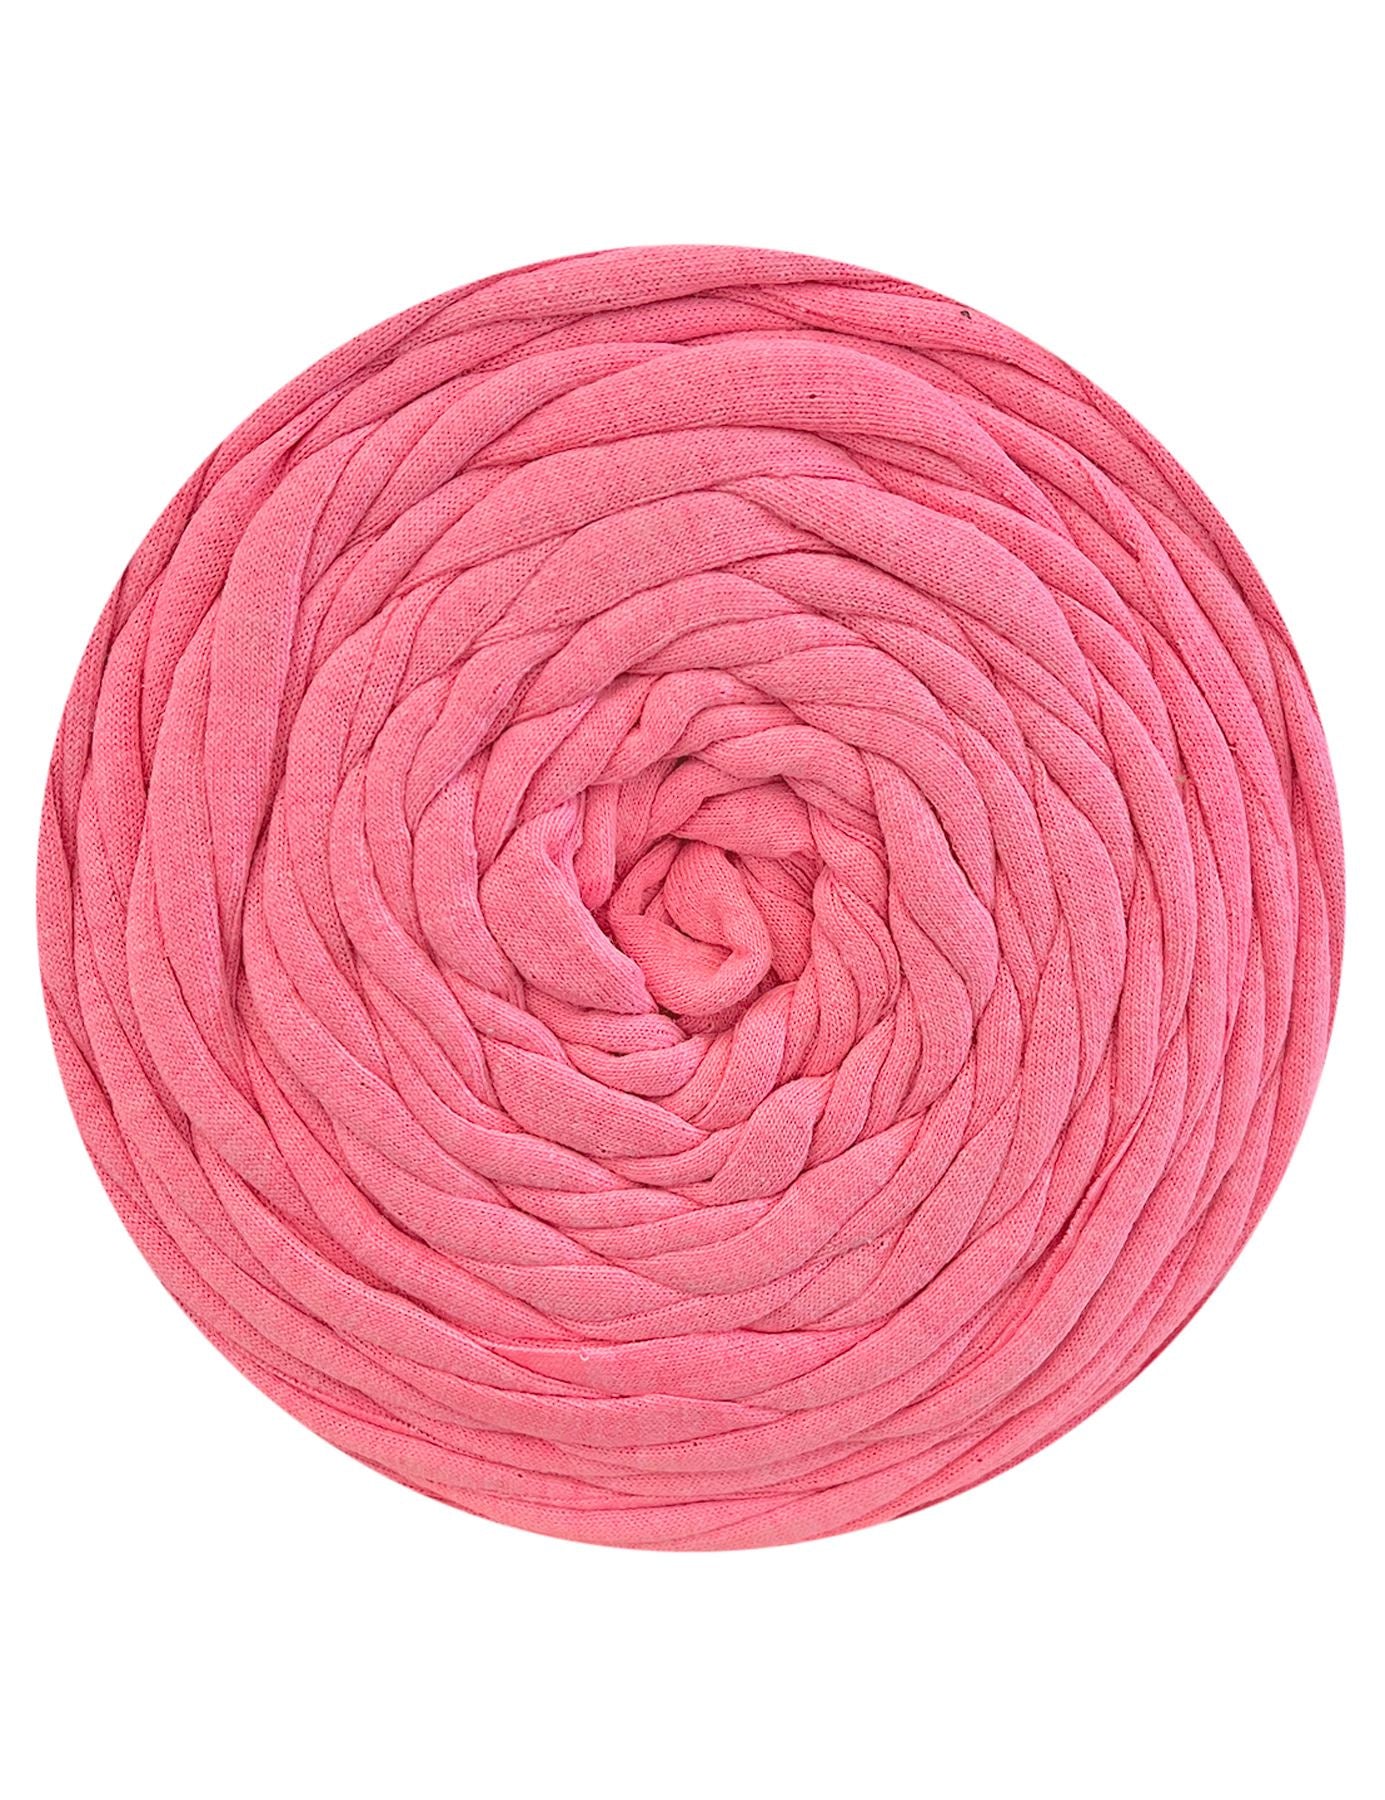 Vibrant pink t-shirt yarn (100-120m)